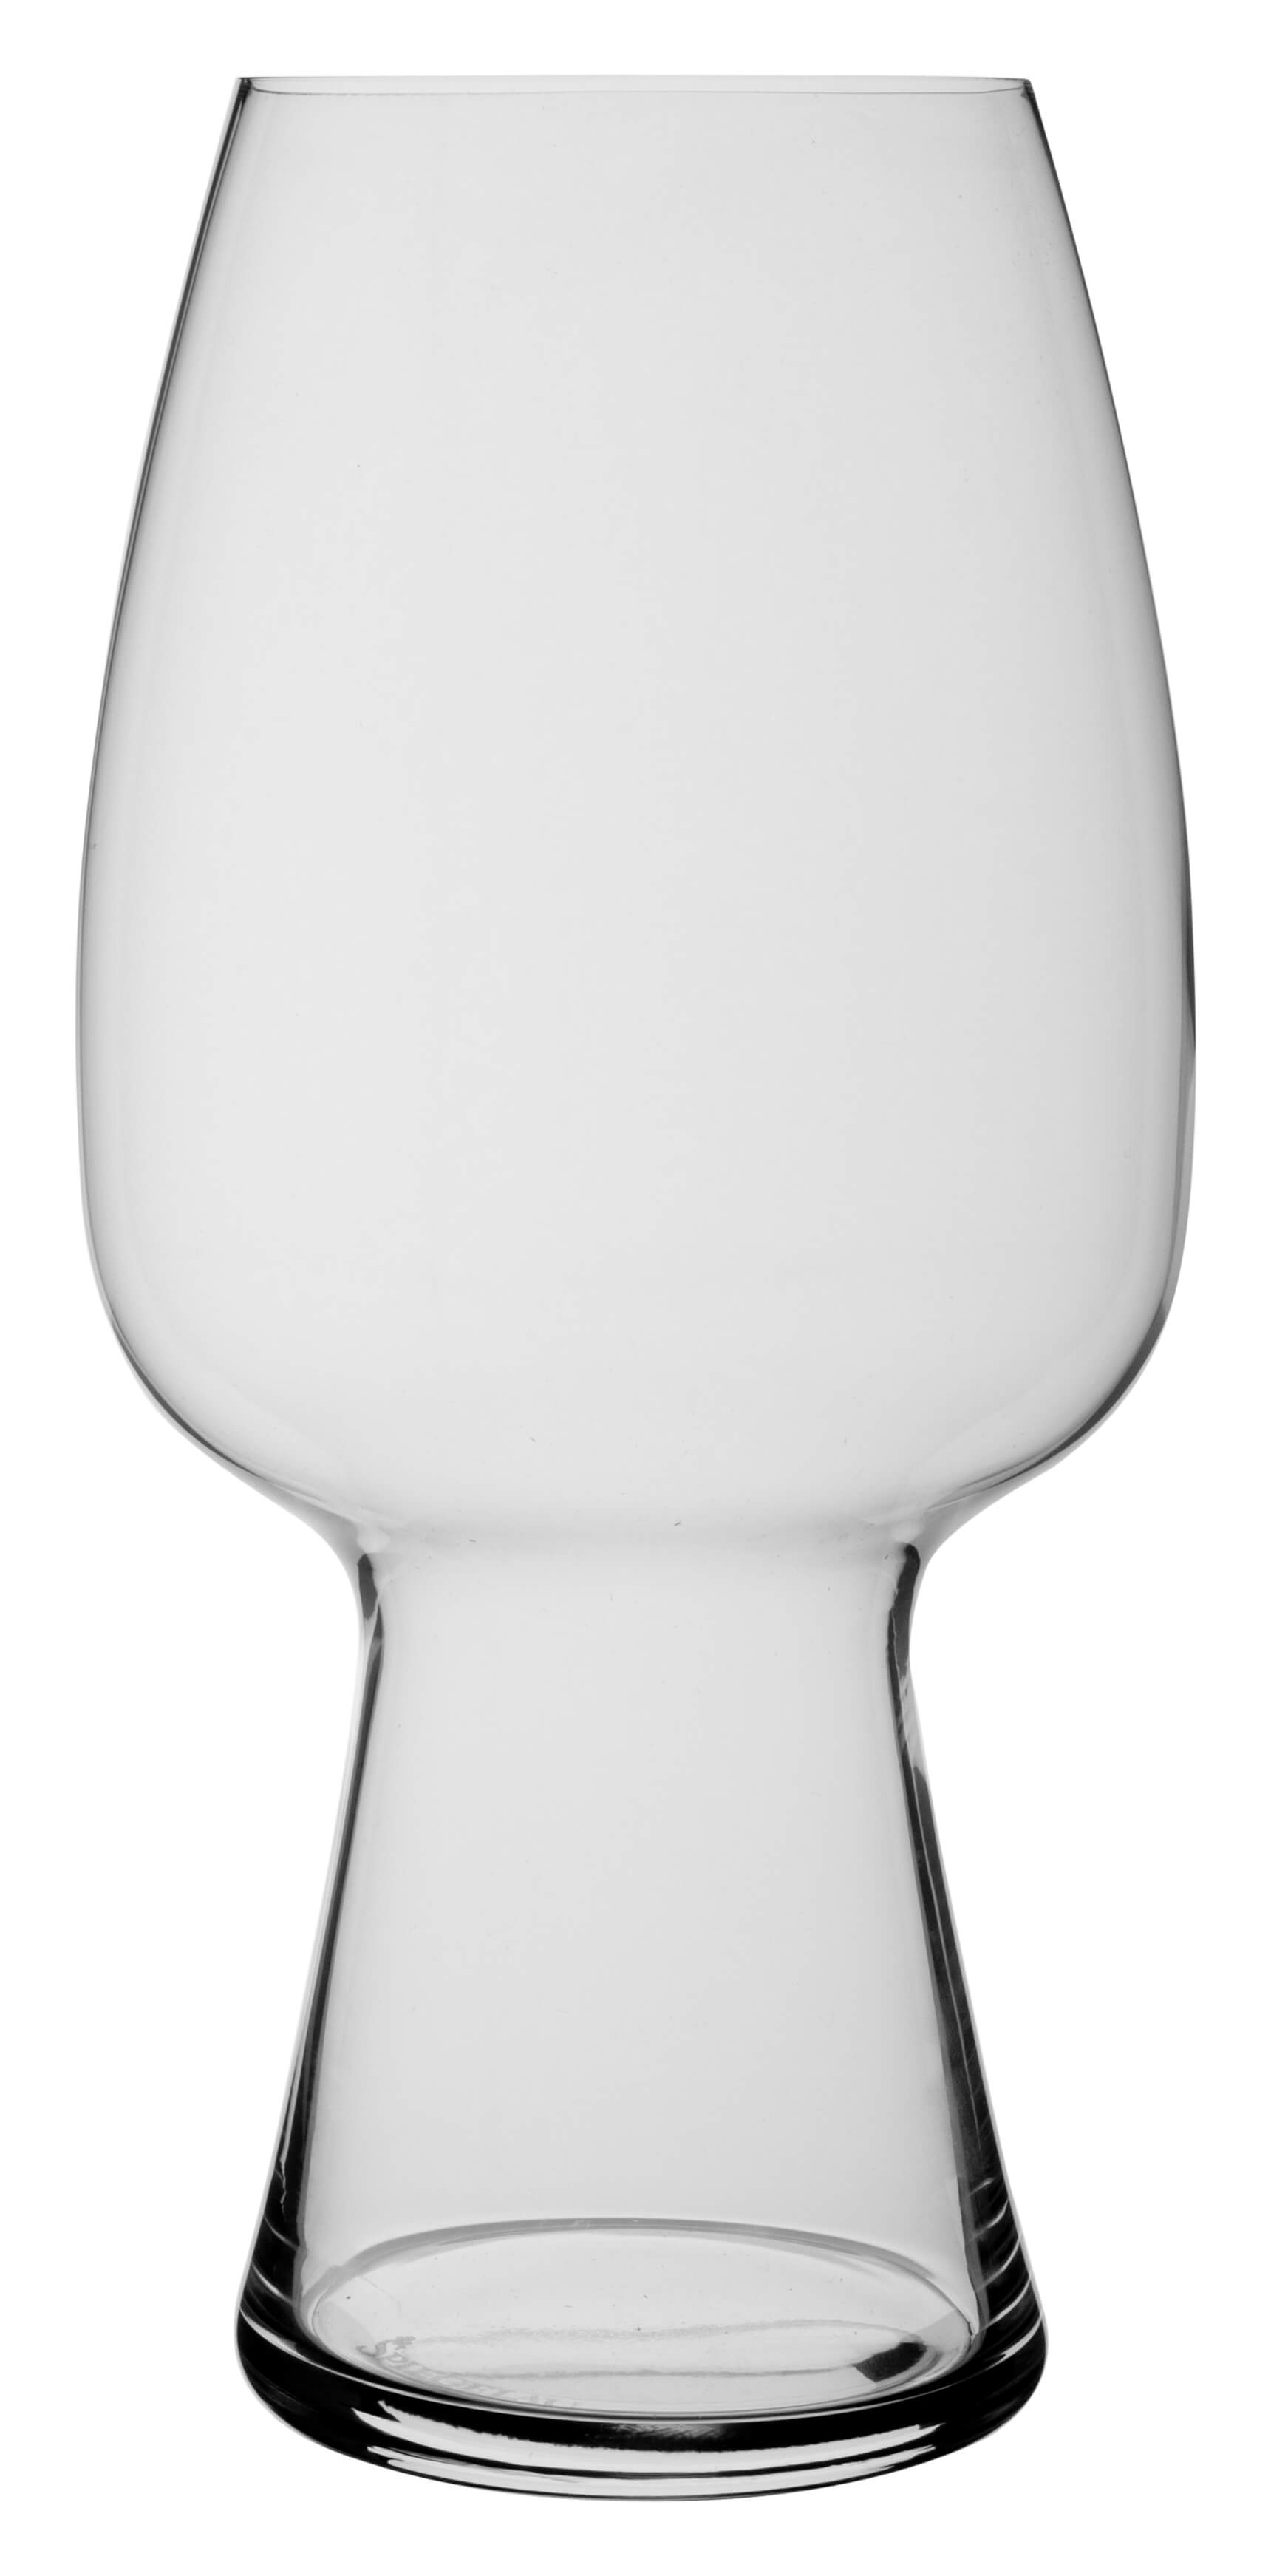 Stout Glas, Craft Beer Glasses, Spiegelau - 600ml